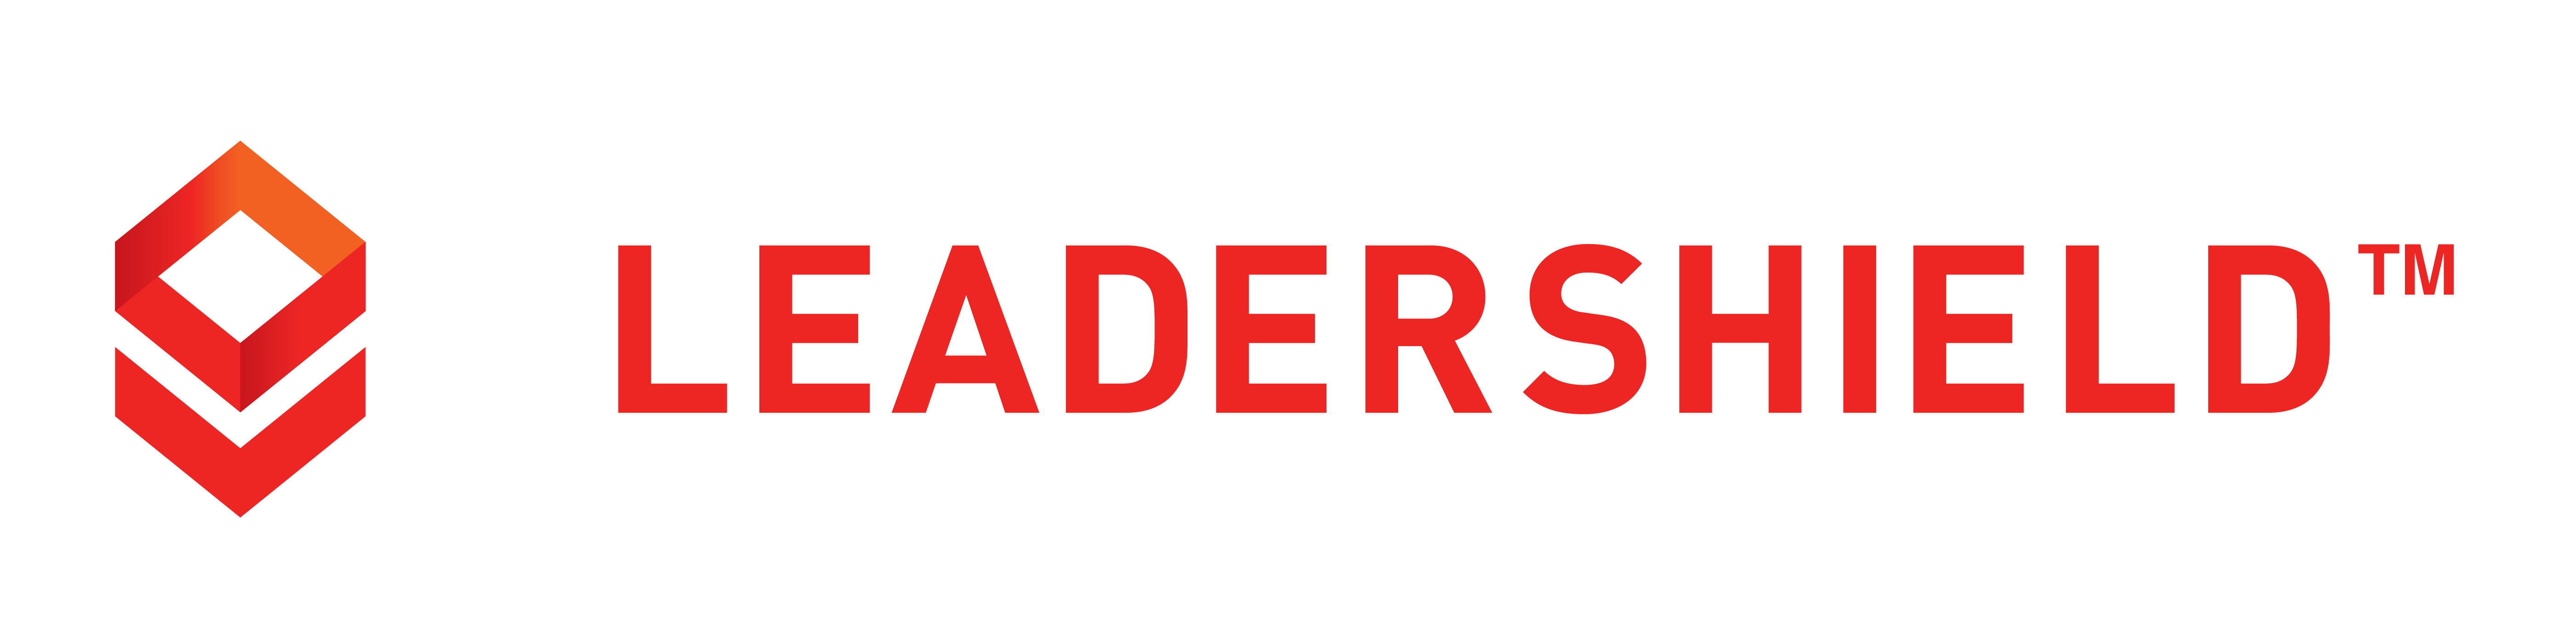 LeaderShield